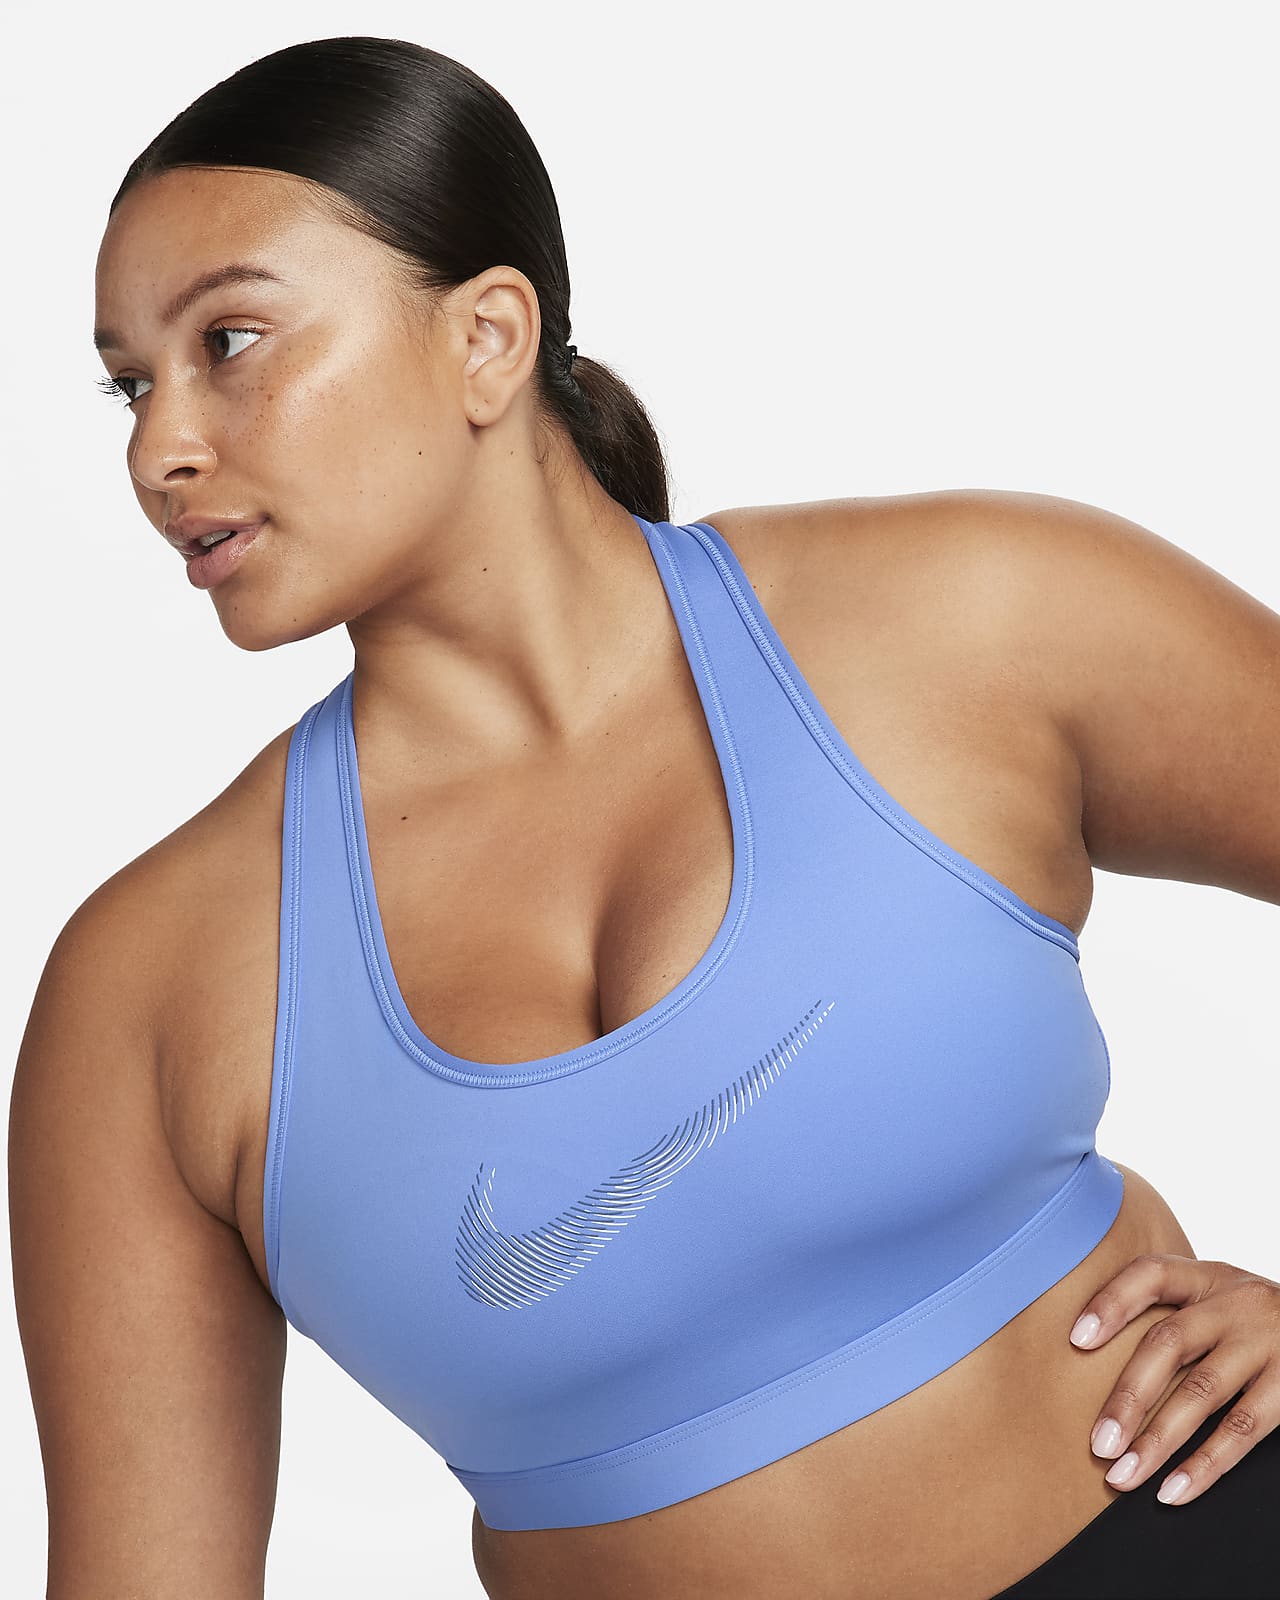 Nike Swoosh Medium-Support Women's Padded Graphic Sports Bra